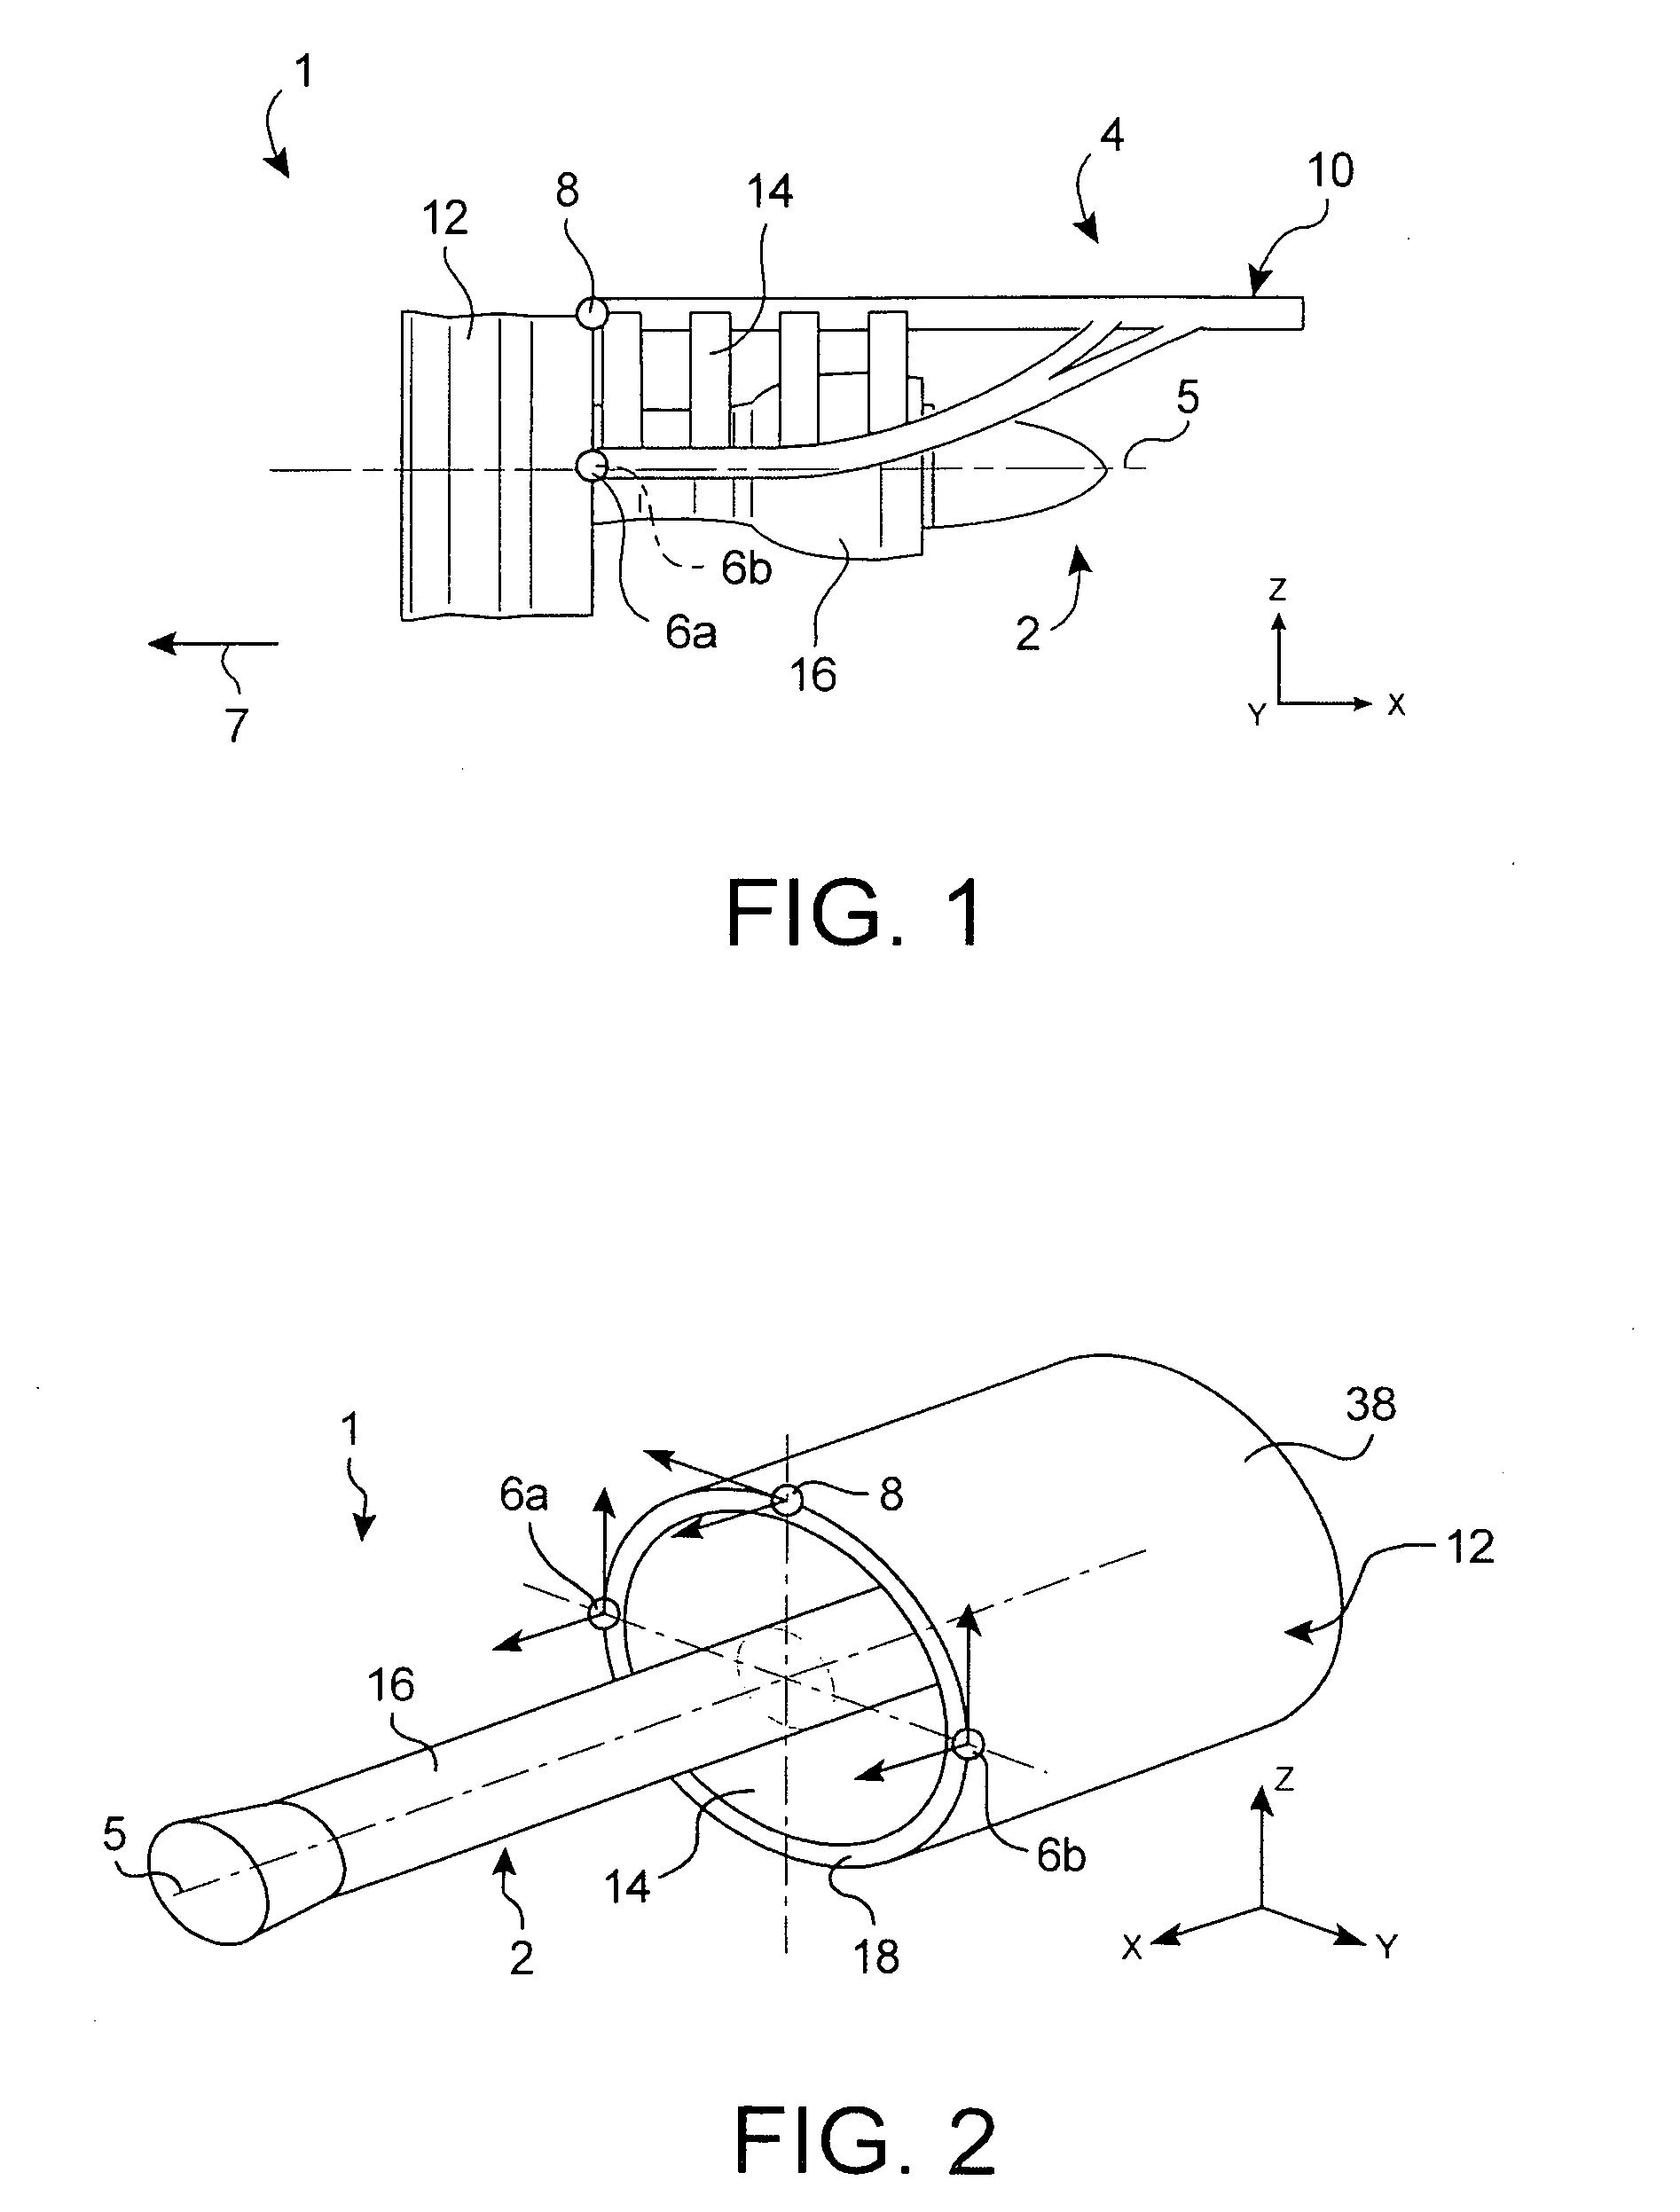 Turbojet Pylon for Aircraft